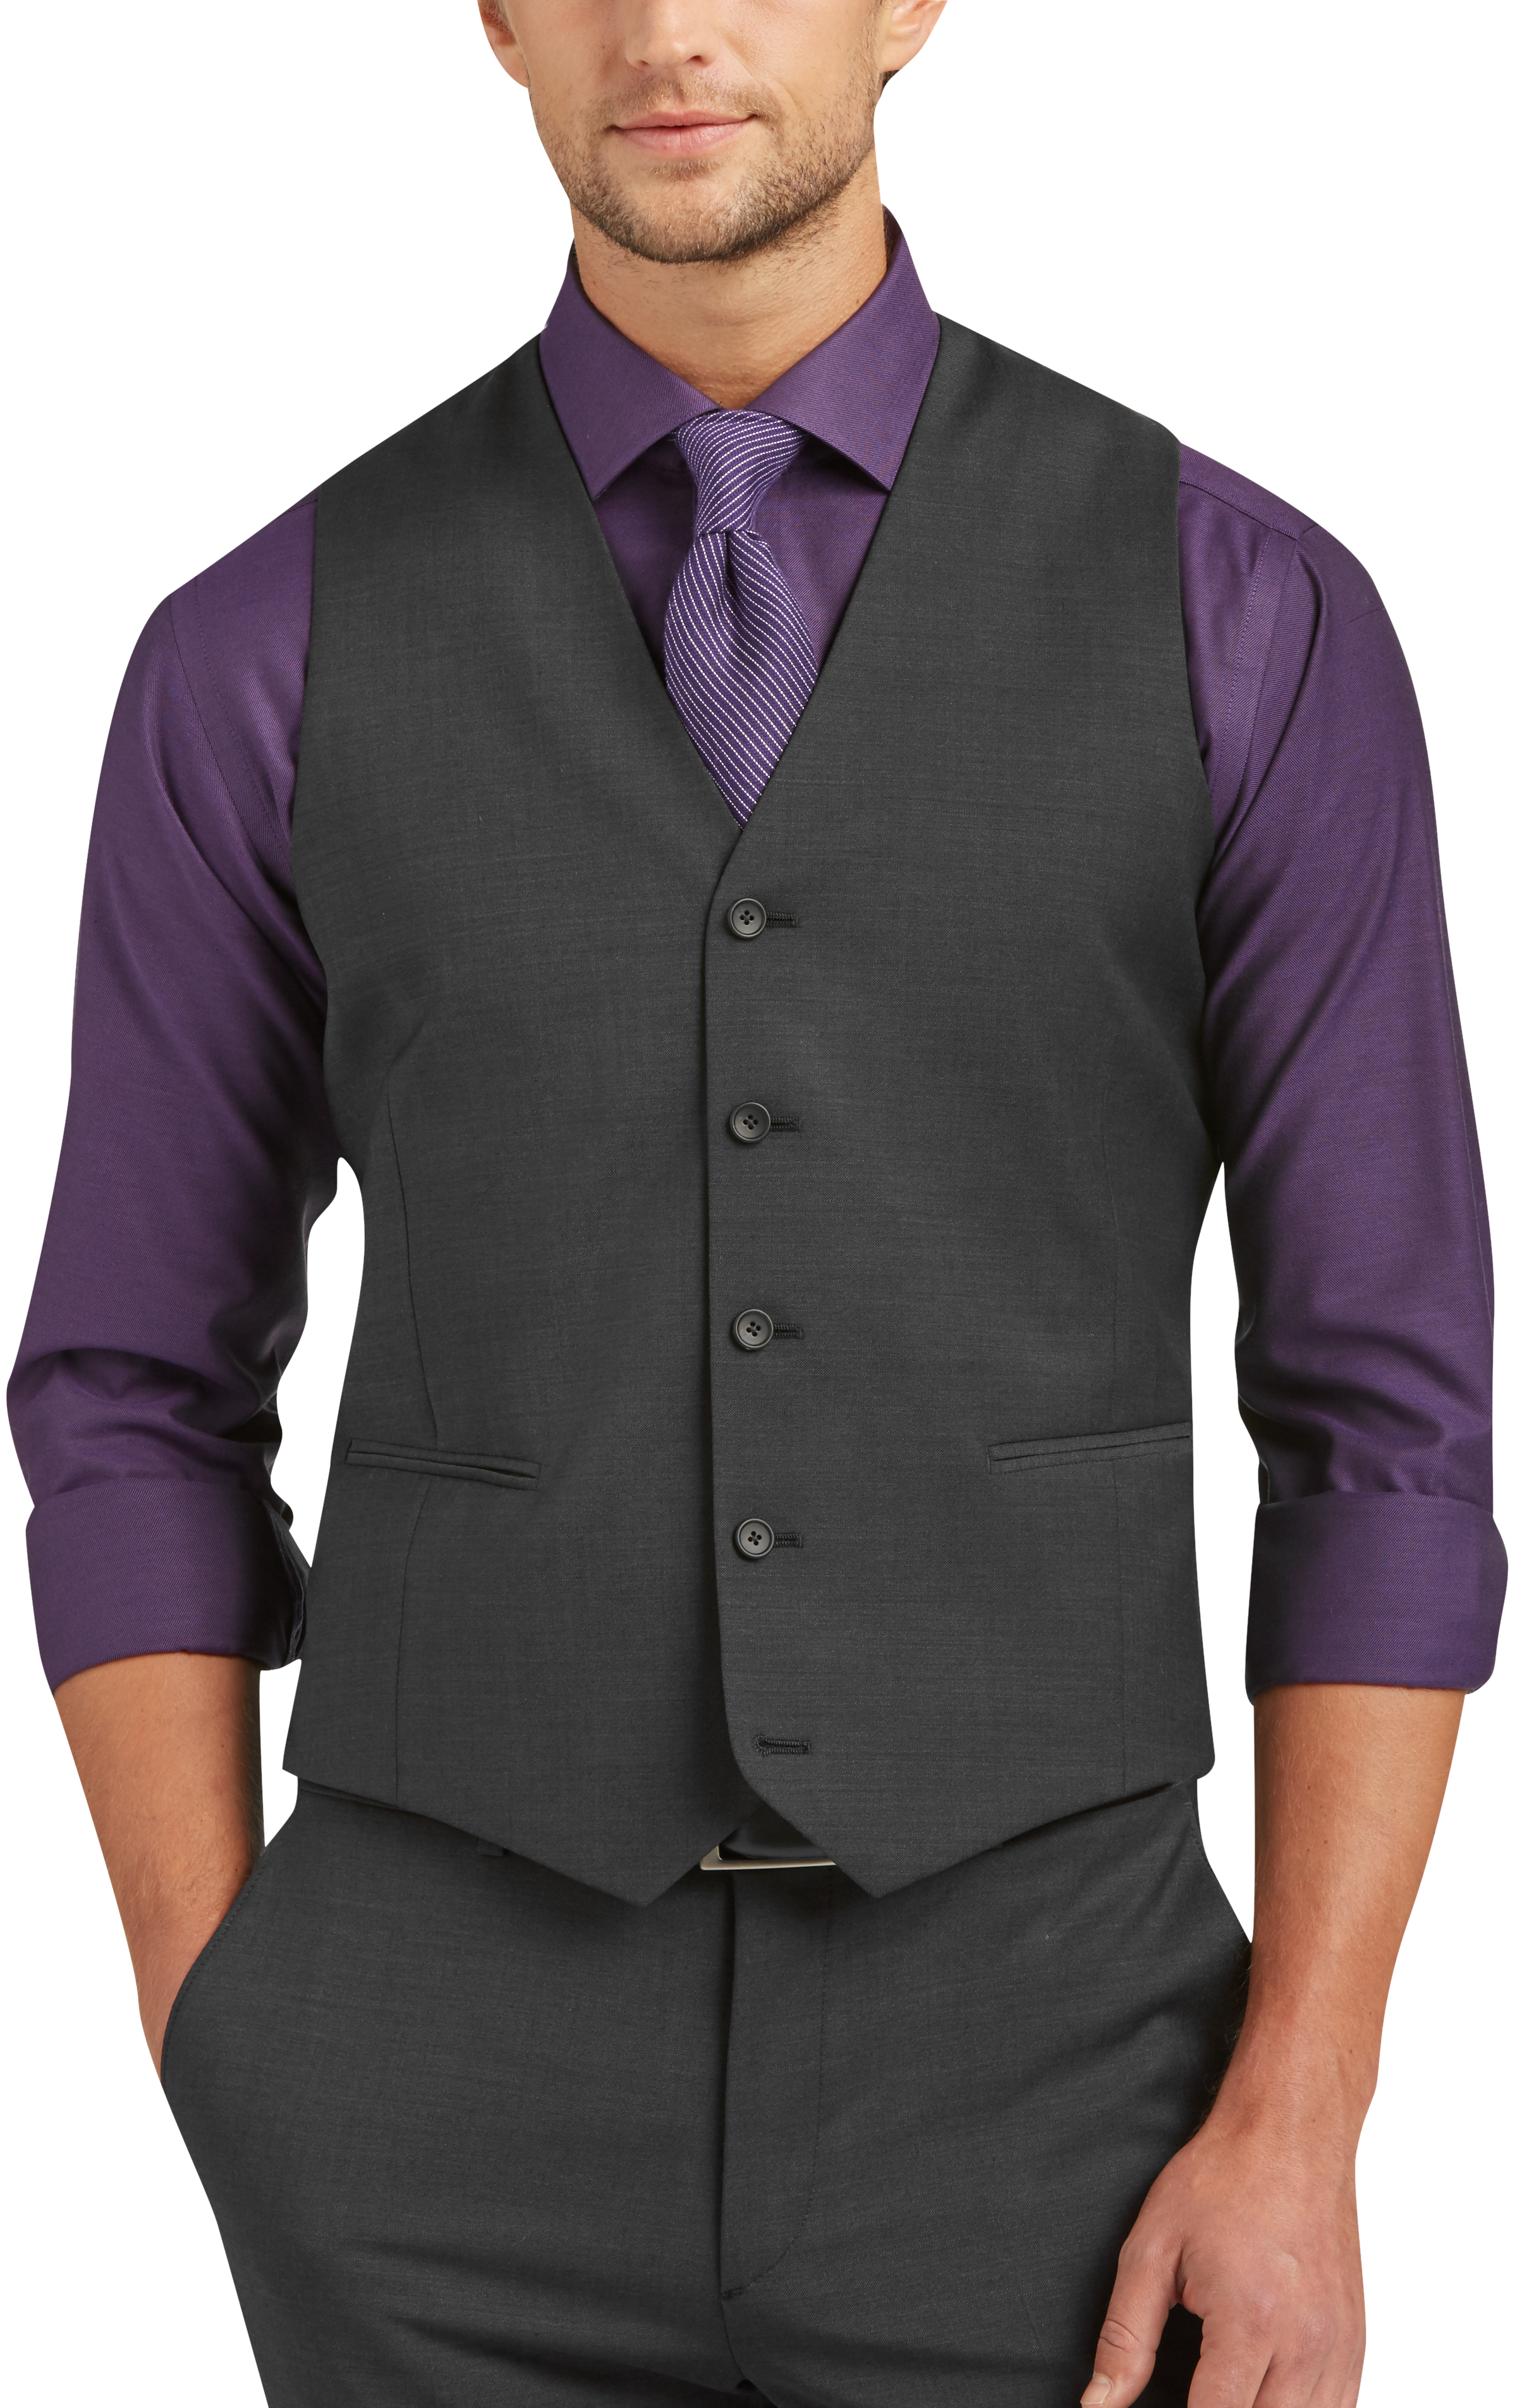 Voorstel Eigendom kofferbak Awearness Kenneth Cole AWEAR-TECH Slim Fit Suit Separates Vest, Charcoal -  Men's Suits | Men's Wearhouse